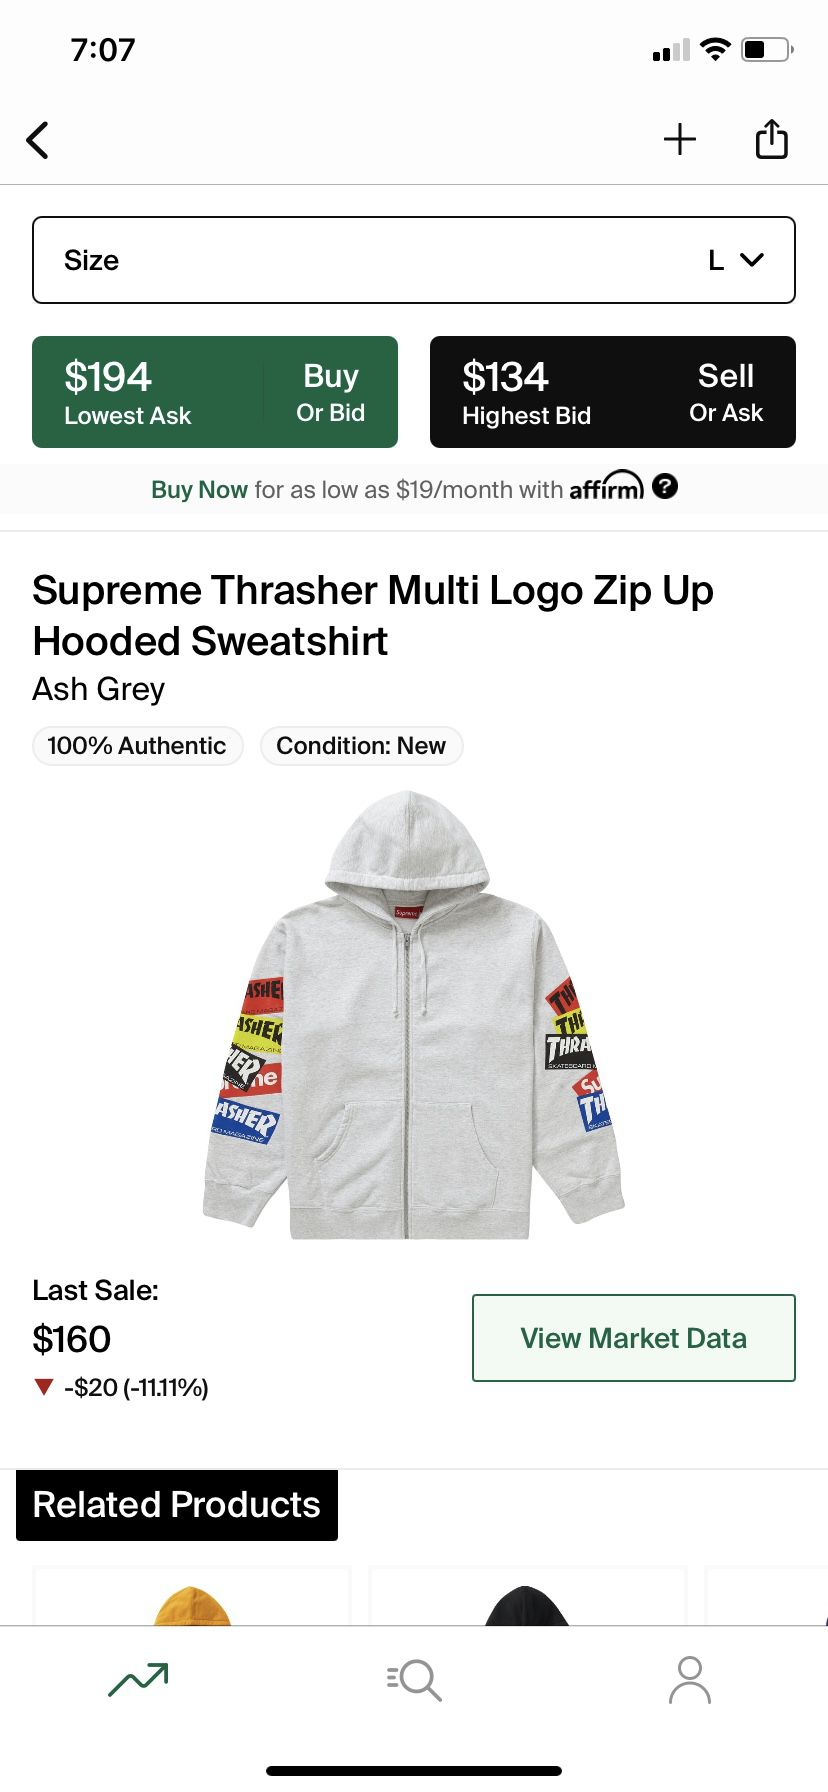 Supreme Thrasher Multi Logo Zip Up Hooded Sweatshirt